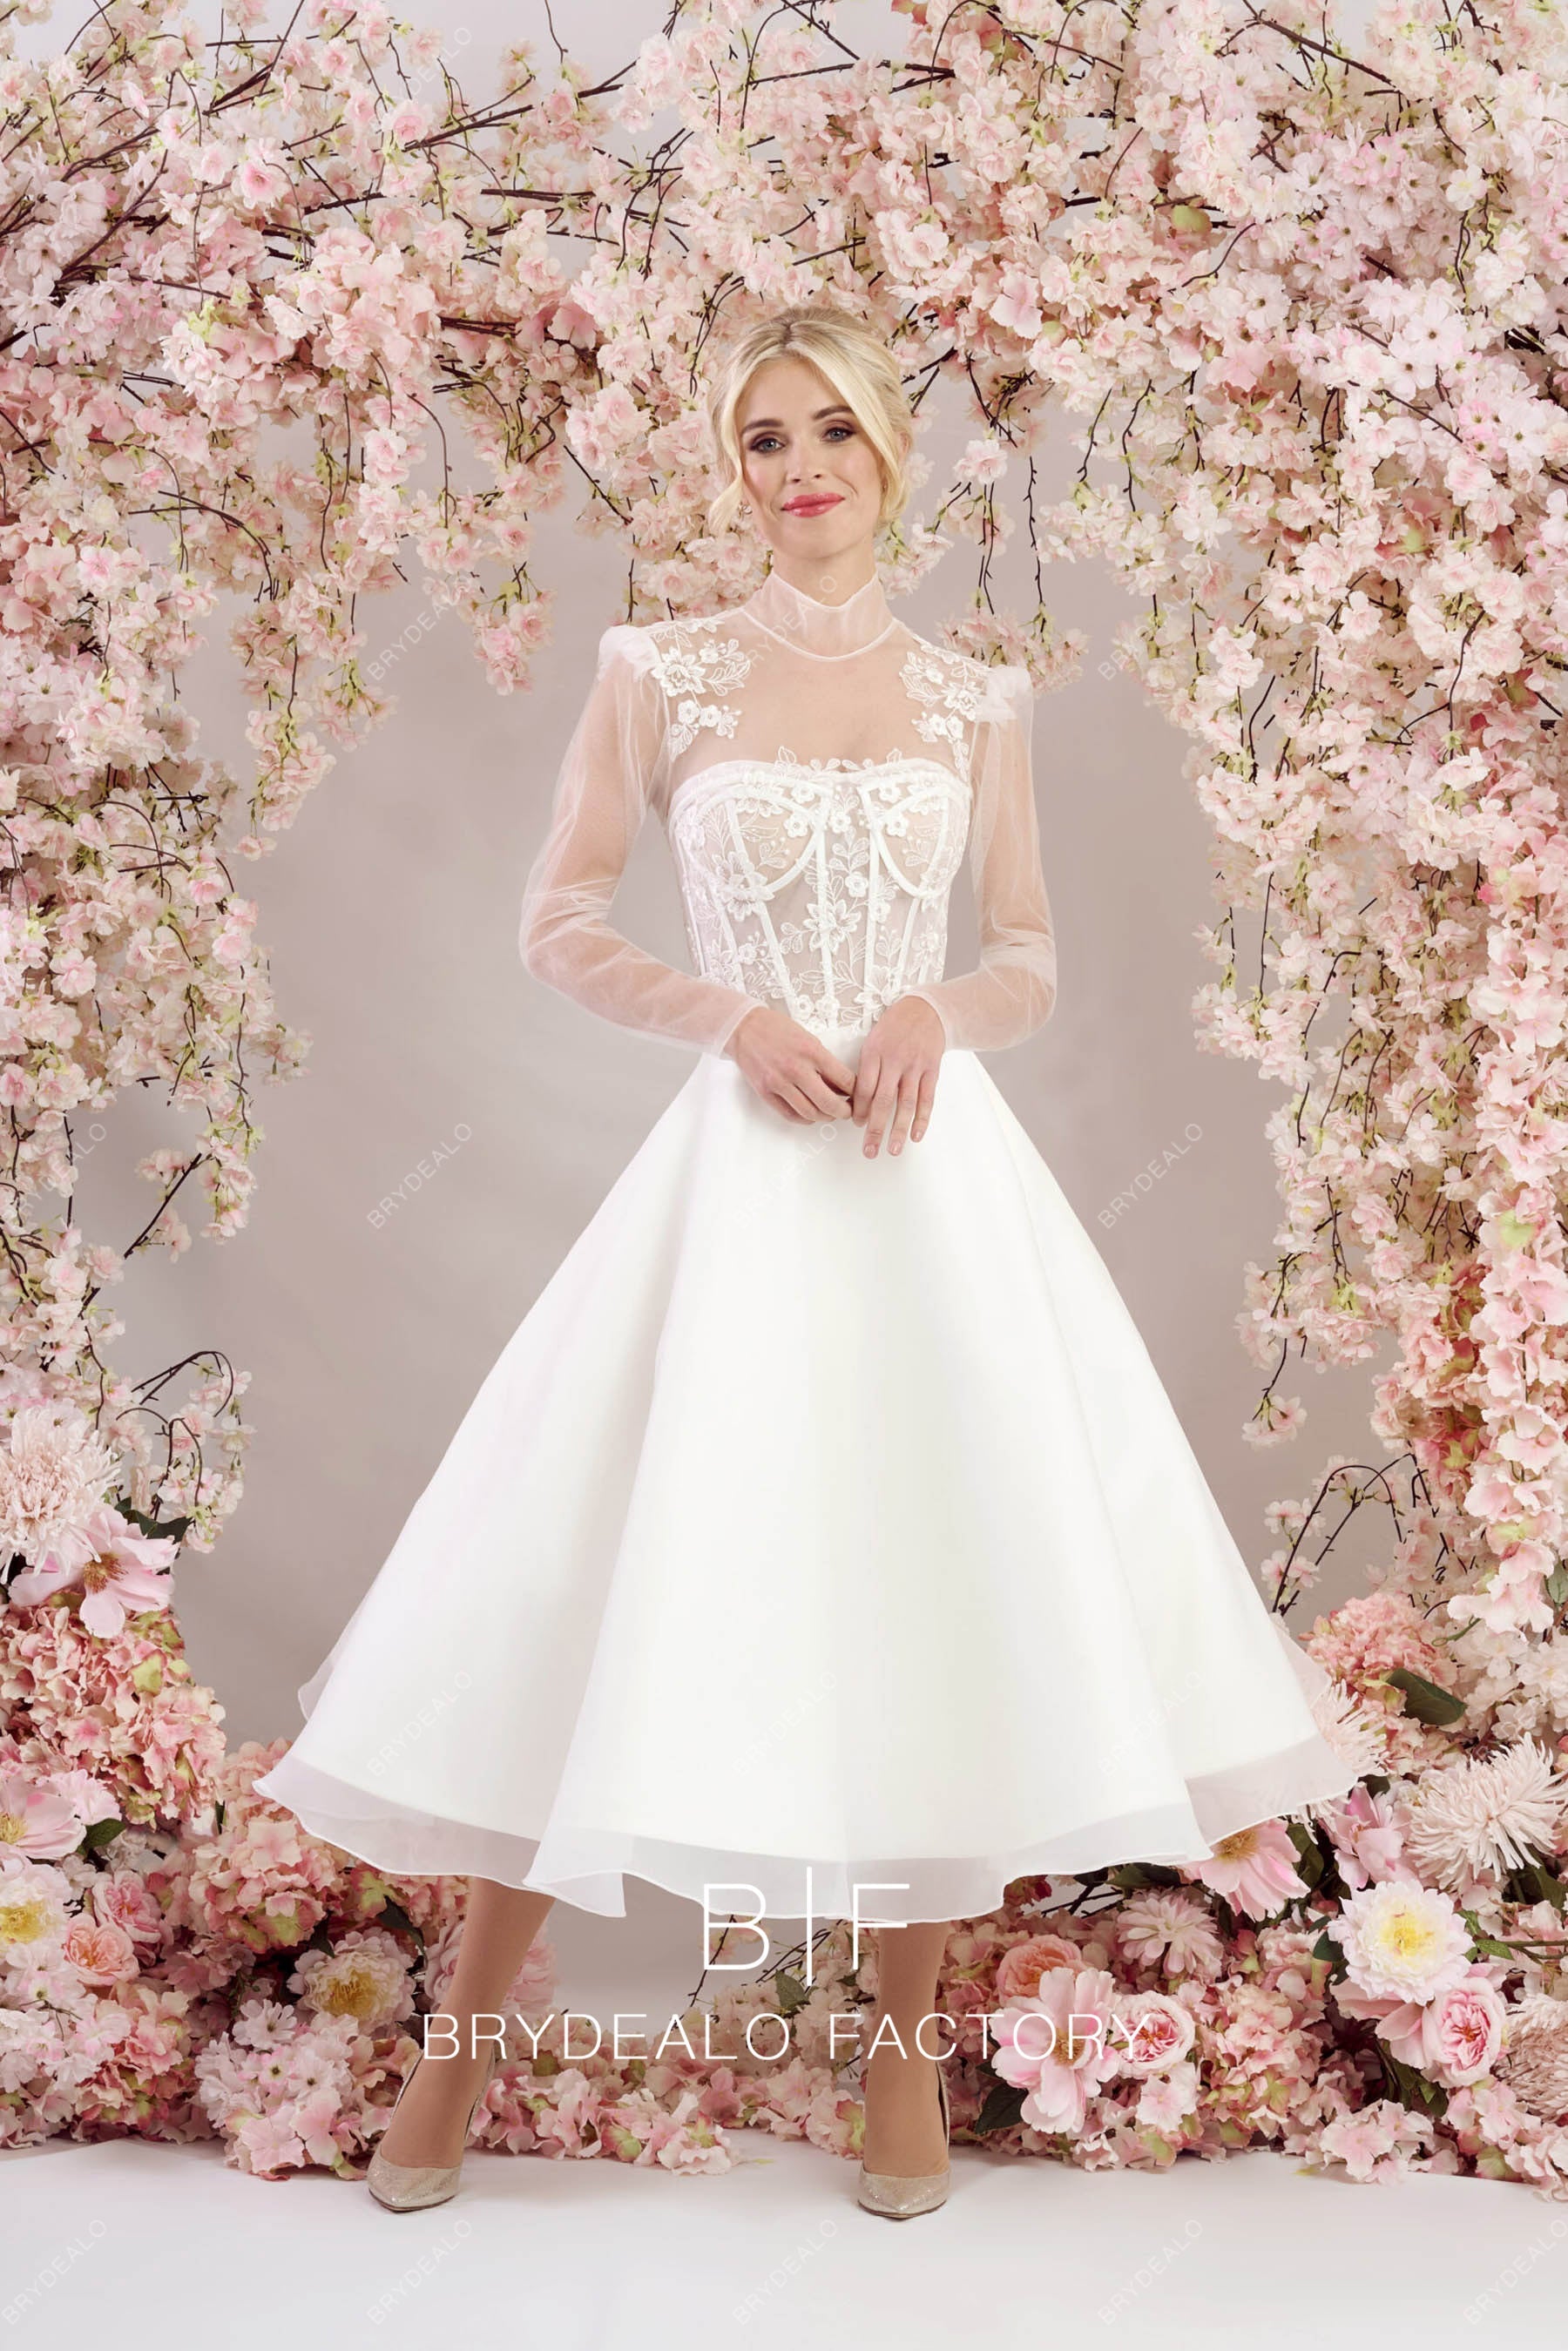 Luxe A1050W Enchanting Corset Wedding Dress